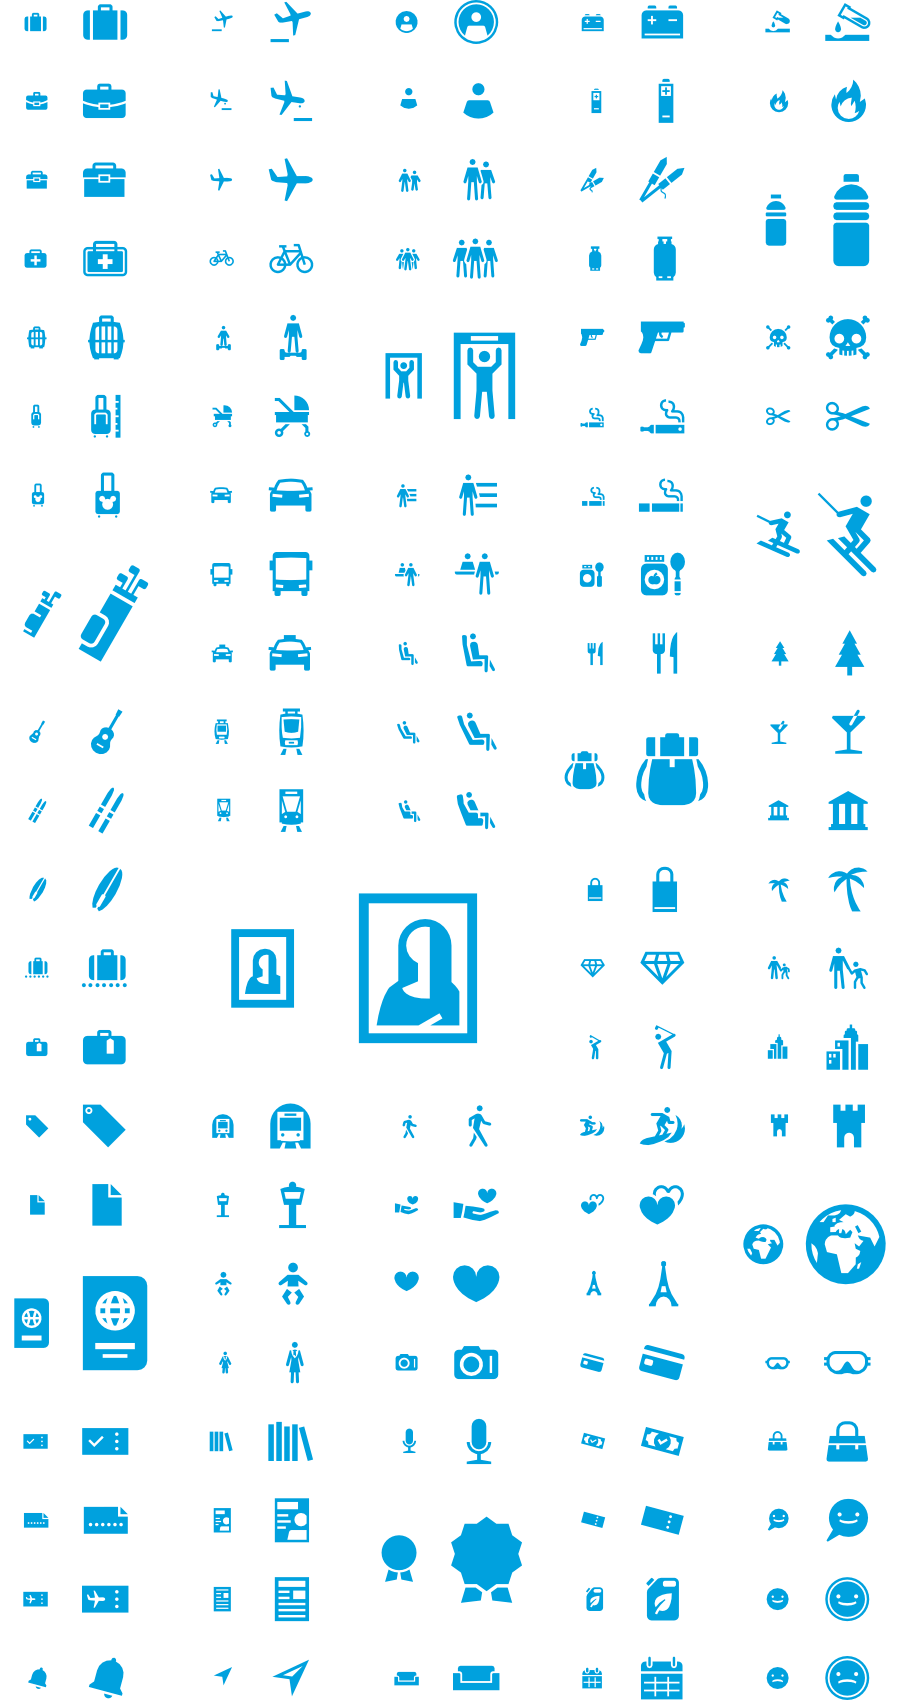 KLM icons